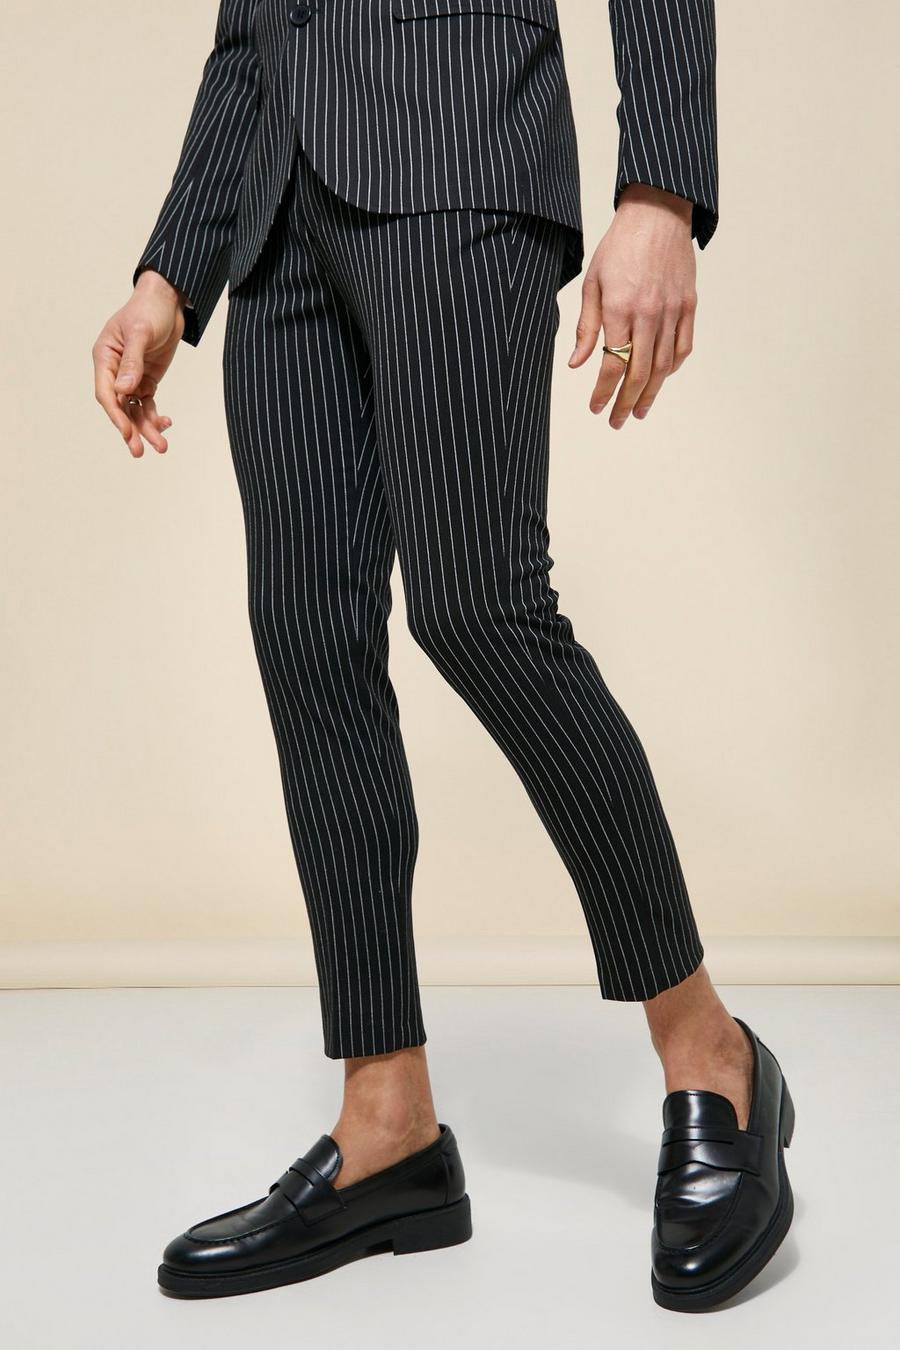 Pantaloni completo Super Skinny Fit a righe verticali, Black negro